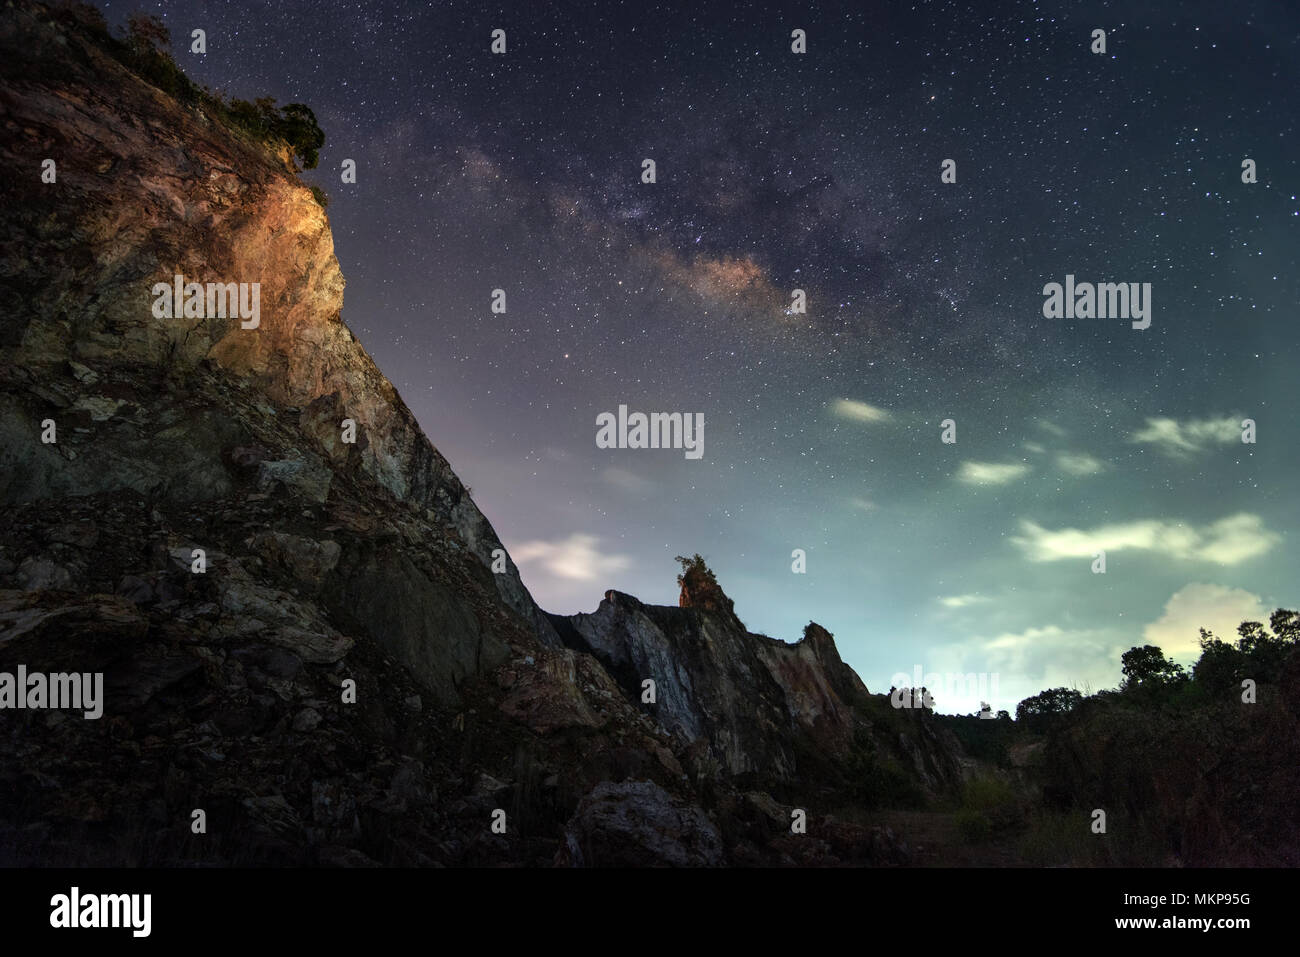 Milky Way Galaxy Astrophotography Night landscape Stock Photo